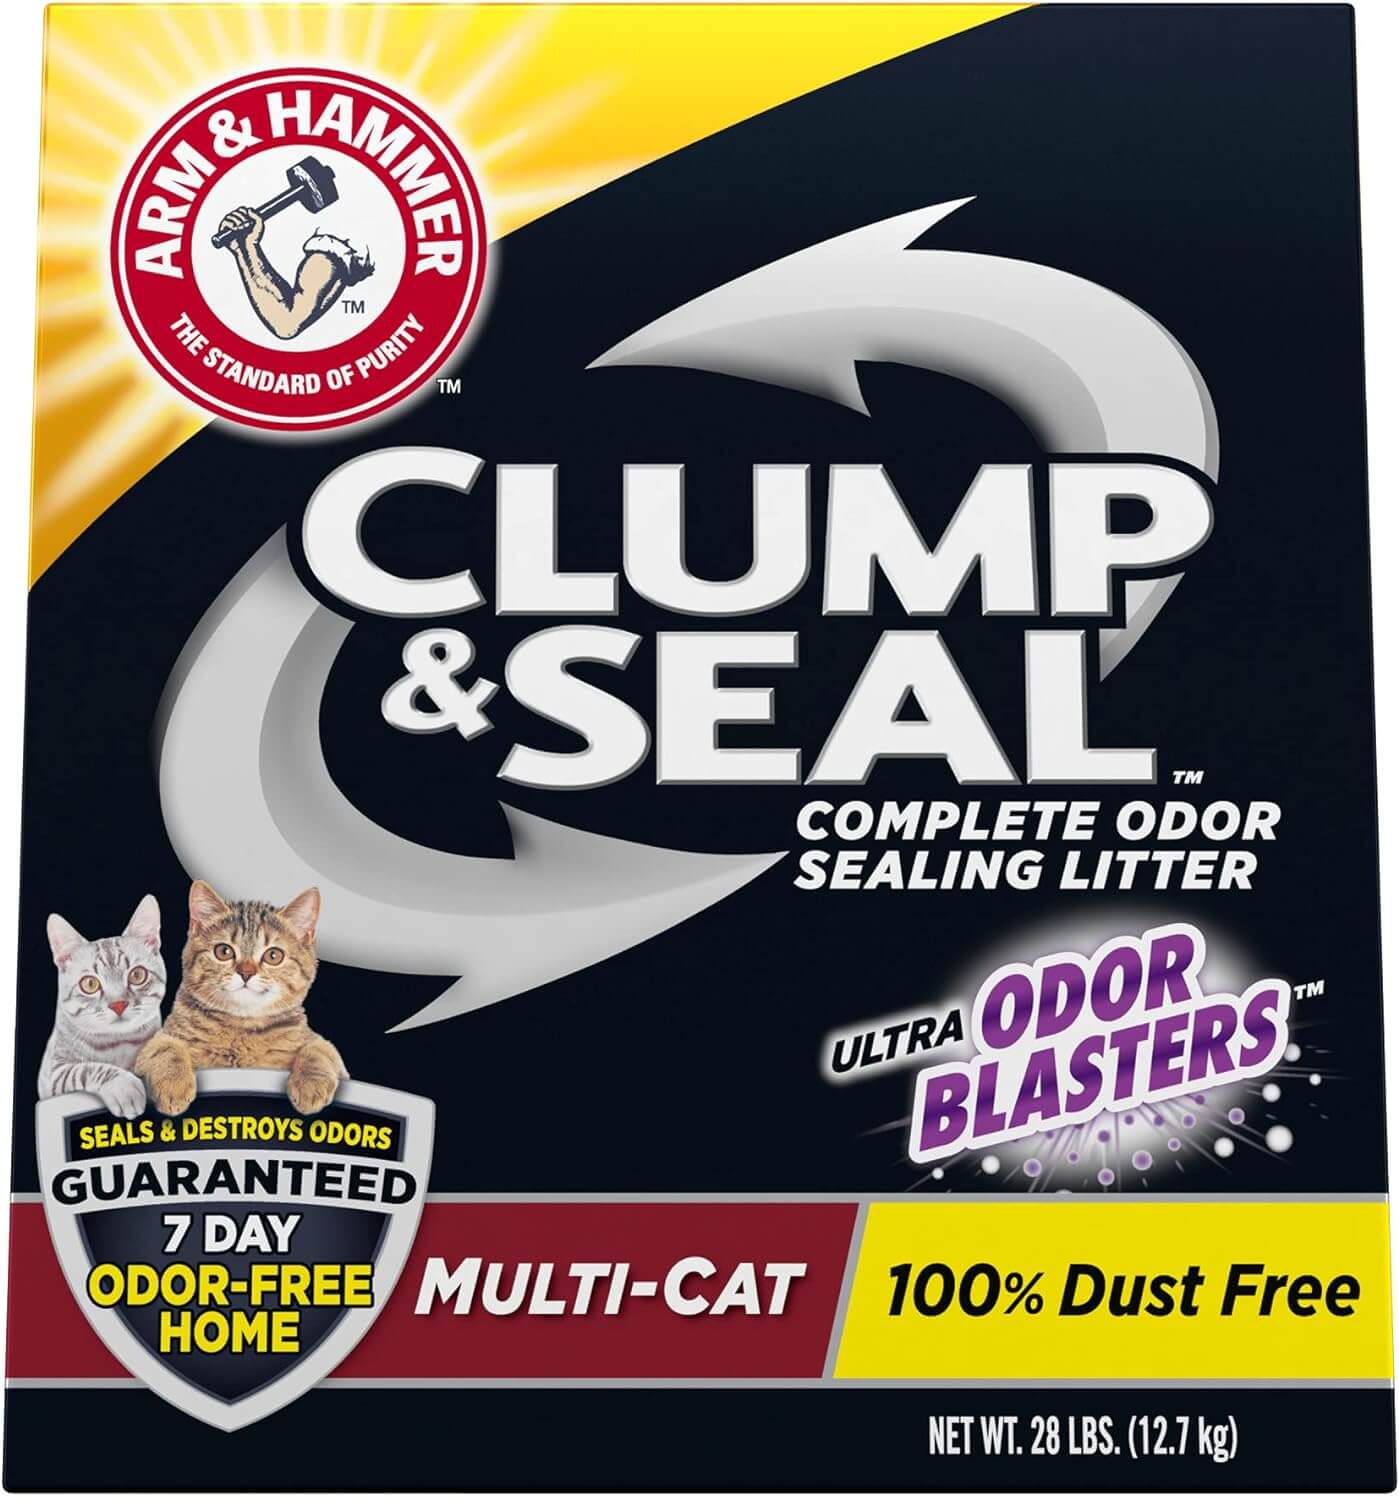 Arm Hammer Clump & Seal Complete Odor Sealing Litter